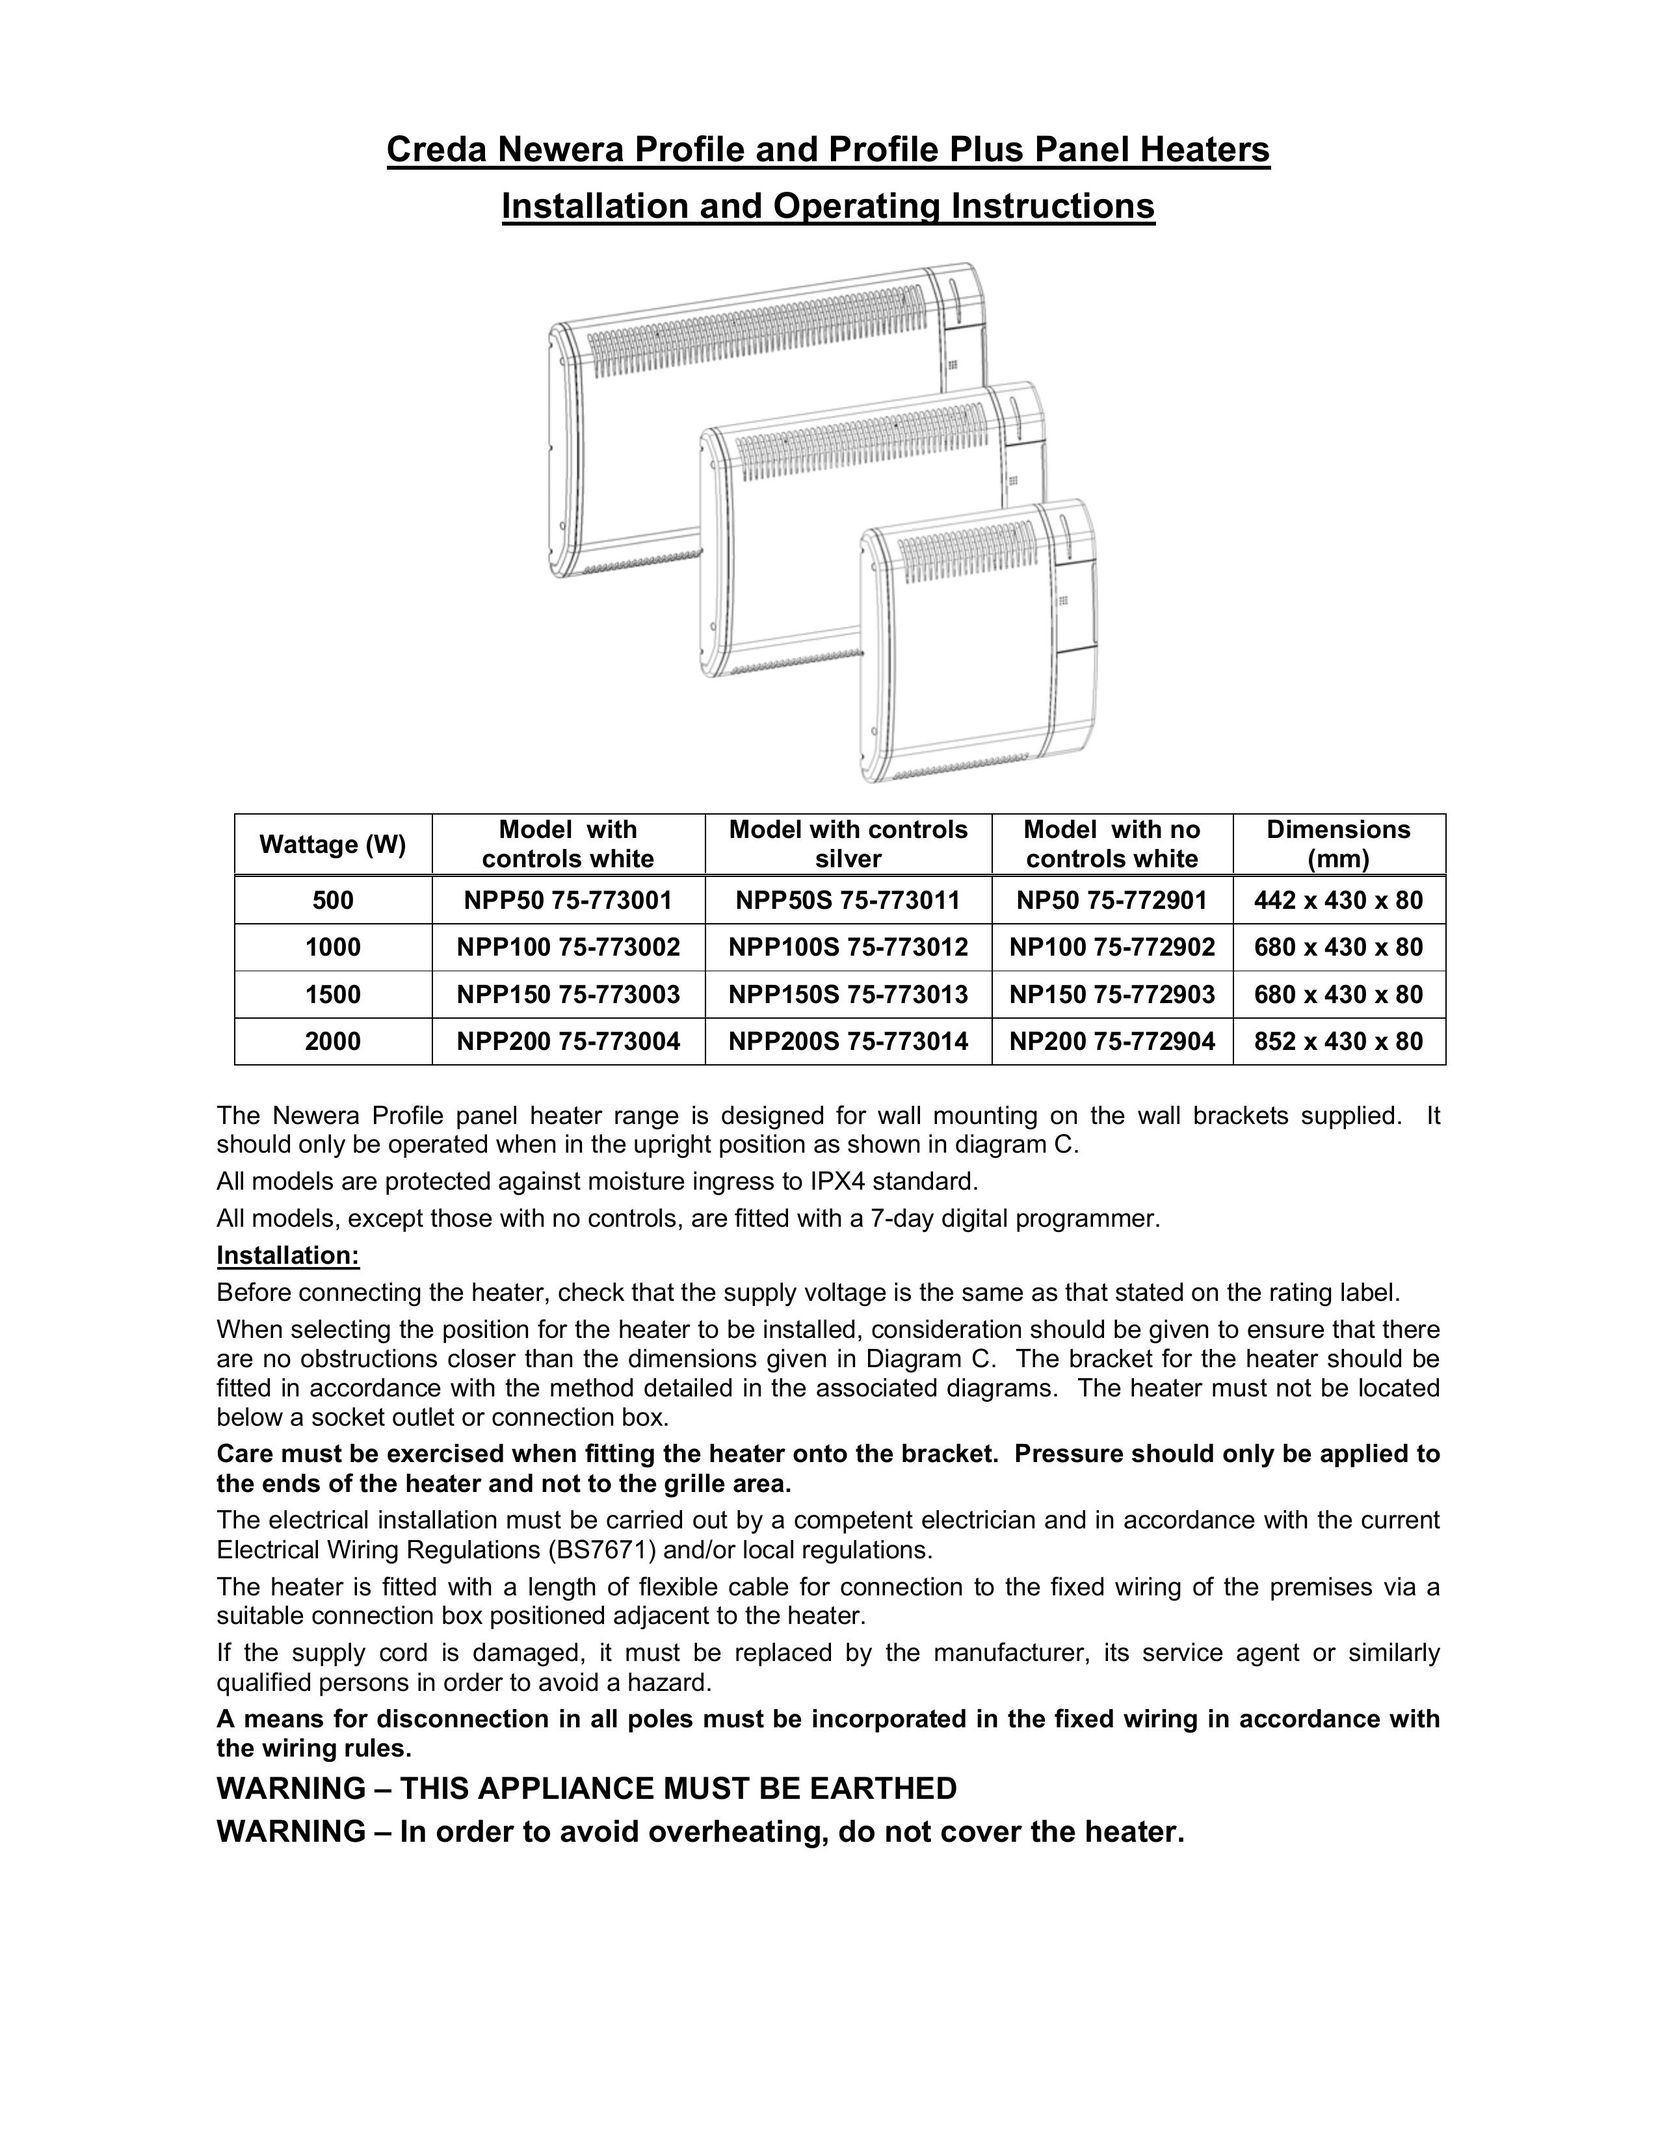 Creda NPP200S 75-773014 Air Conditioner User Manual